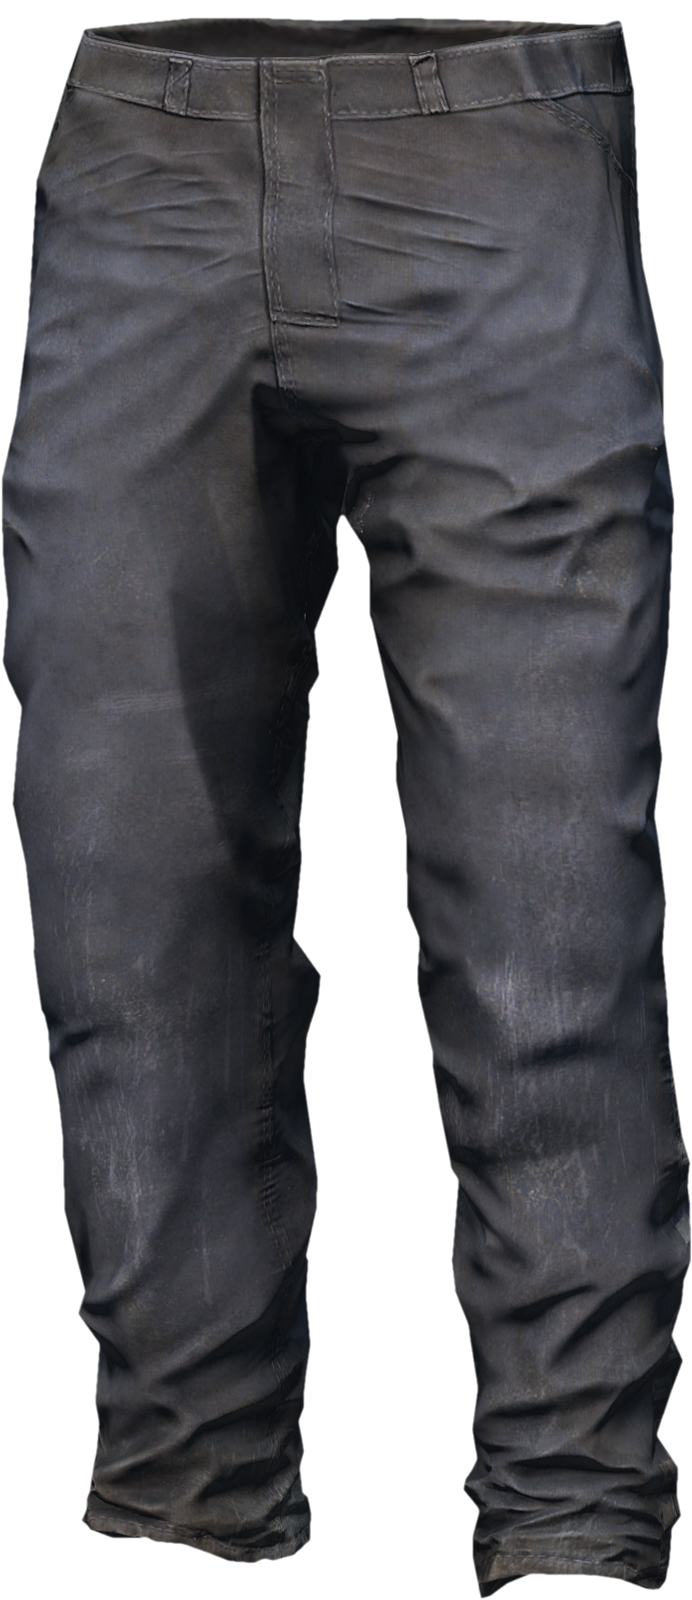 Chino trousers | Levi's Wiki | Fandom